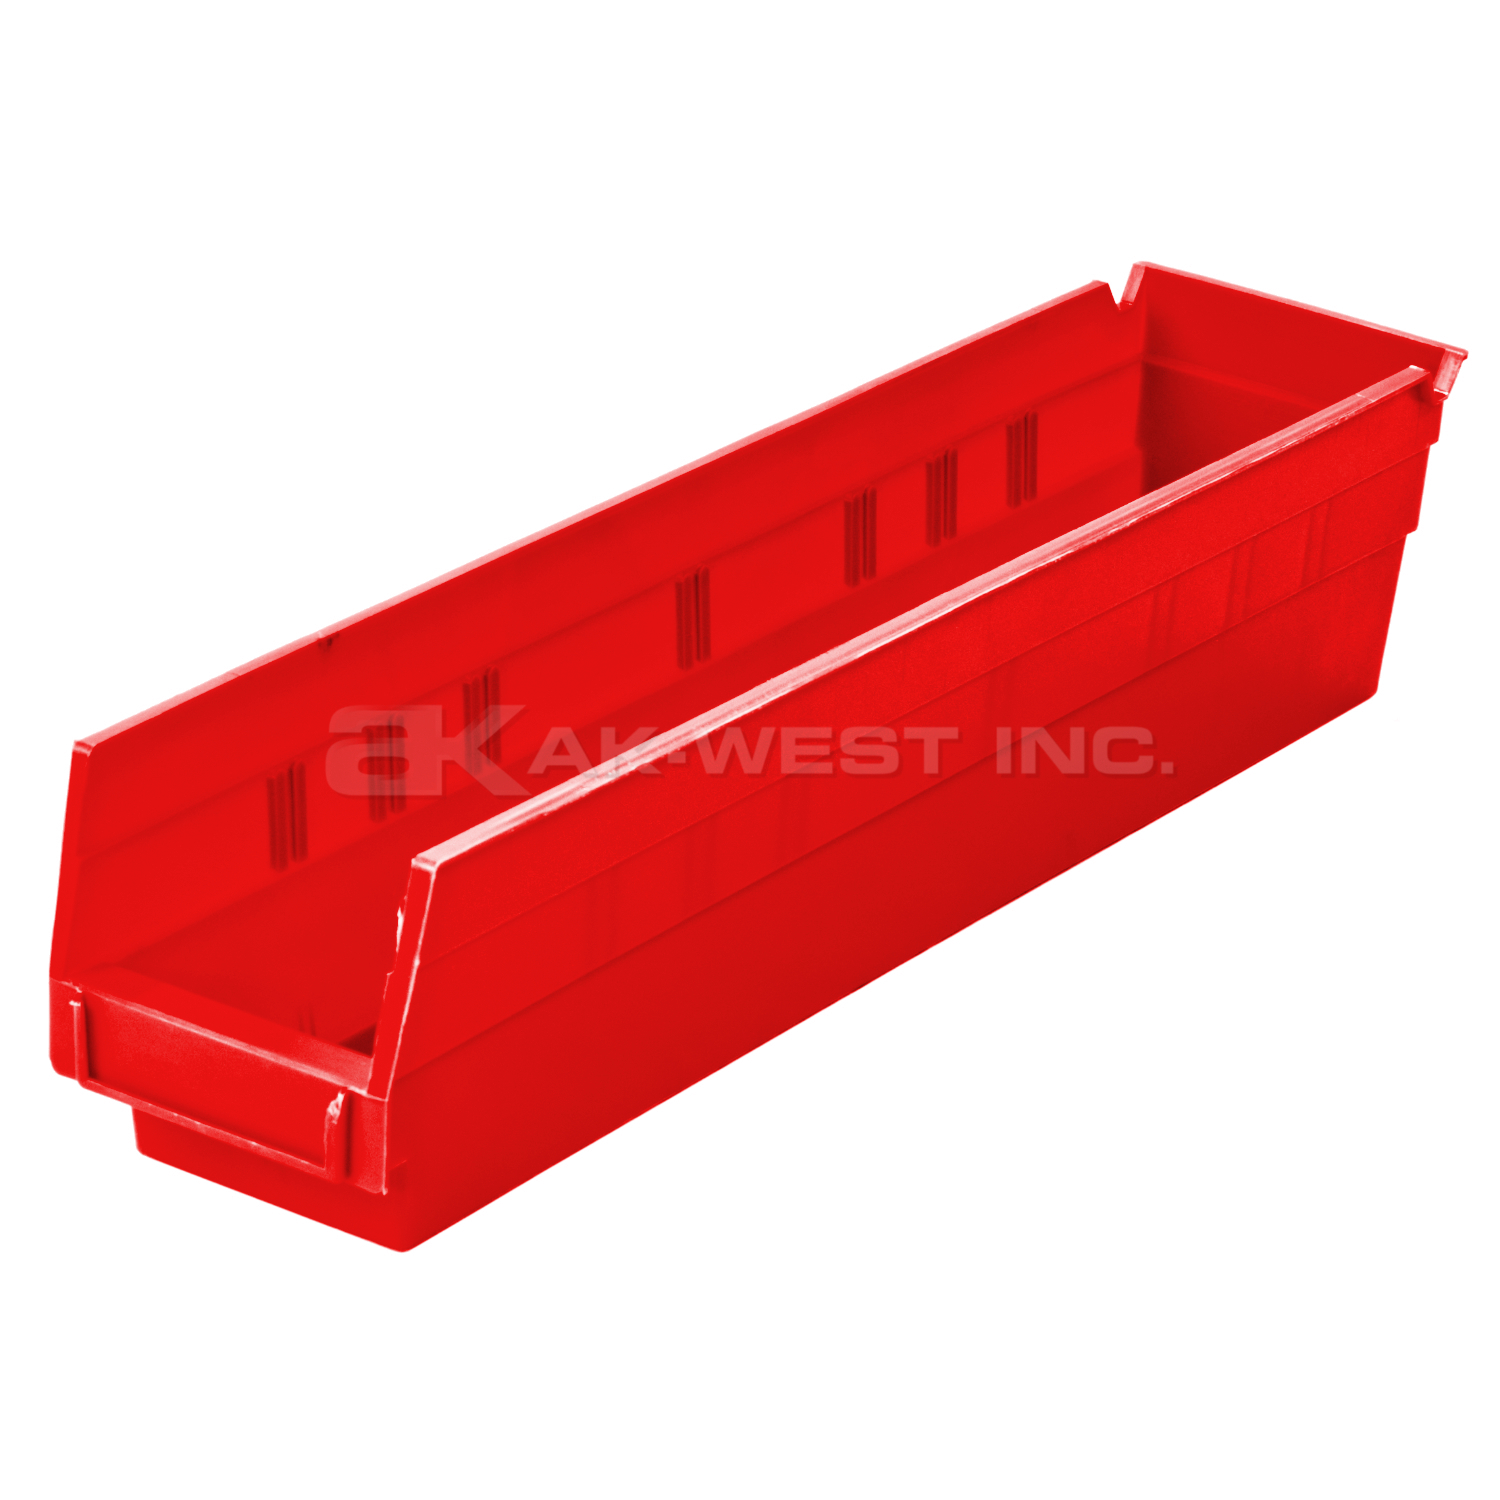 Red, 17-7/8" x 4-1/8" x 4" Shelf Bin (12 Per Carton)